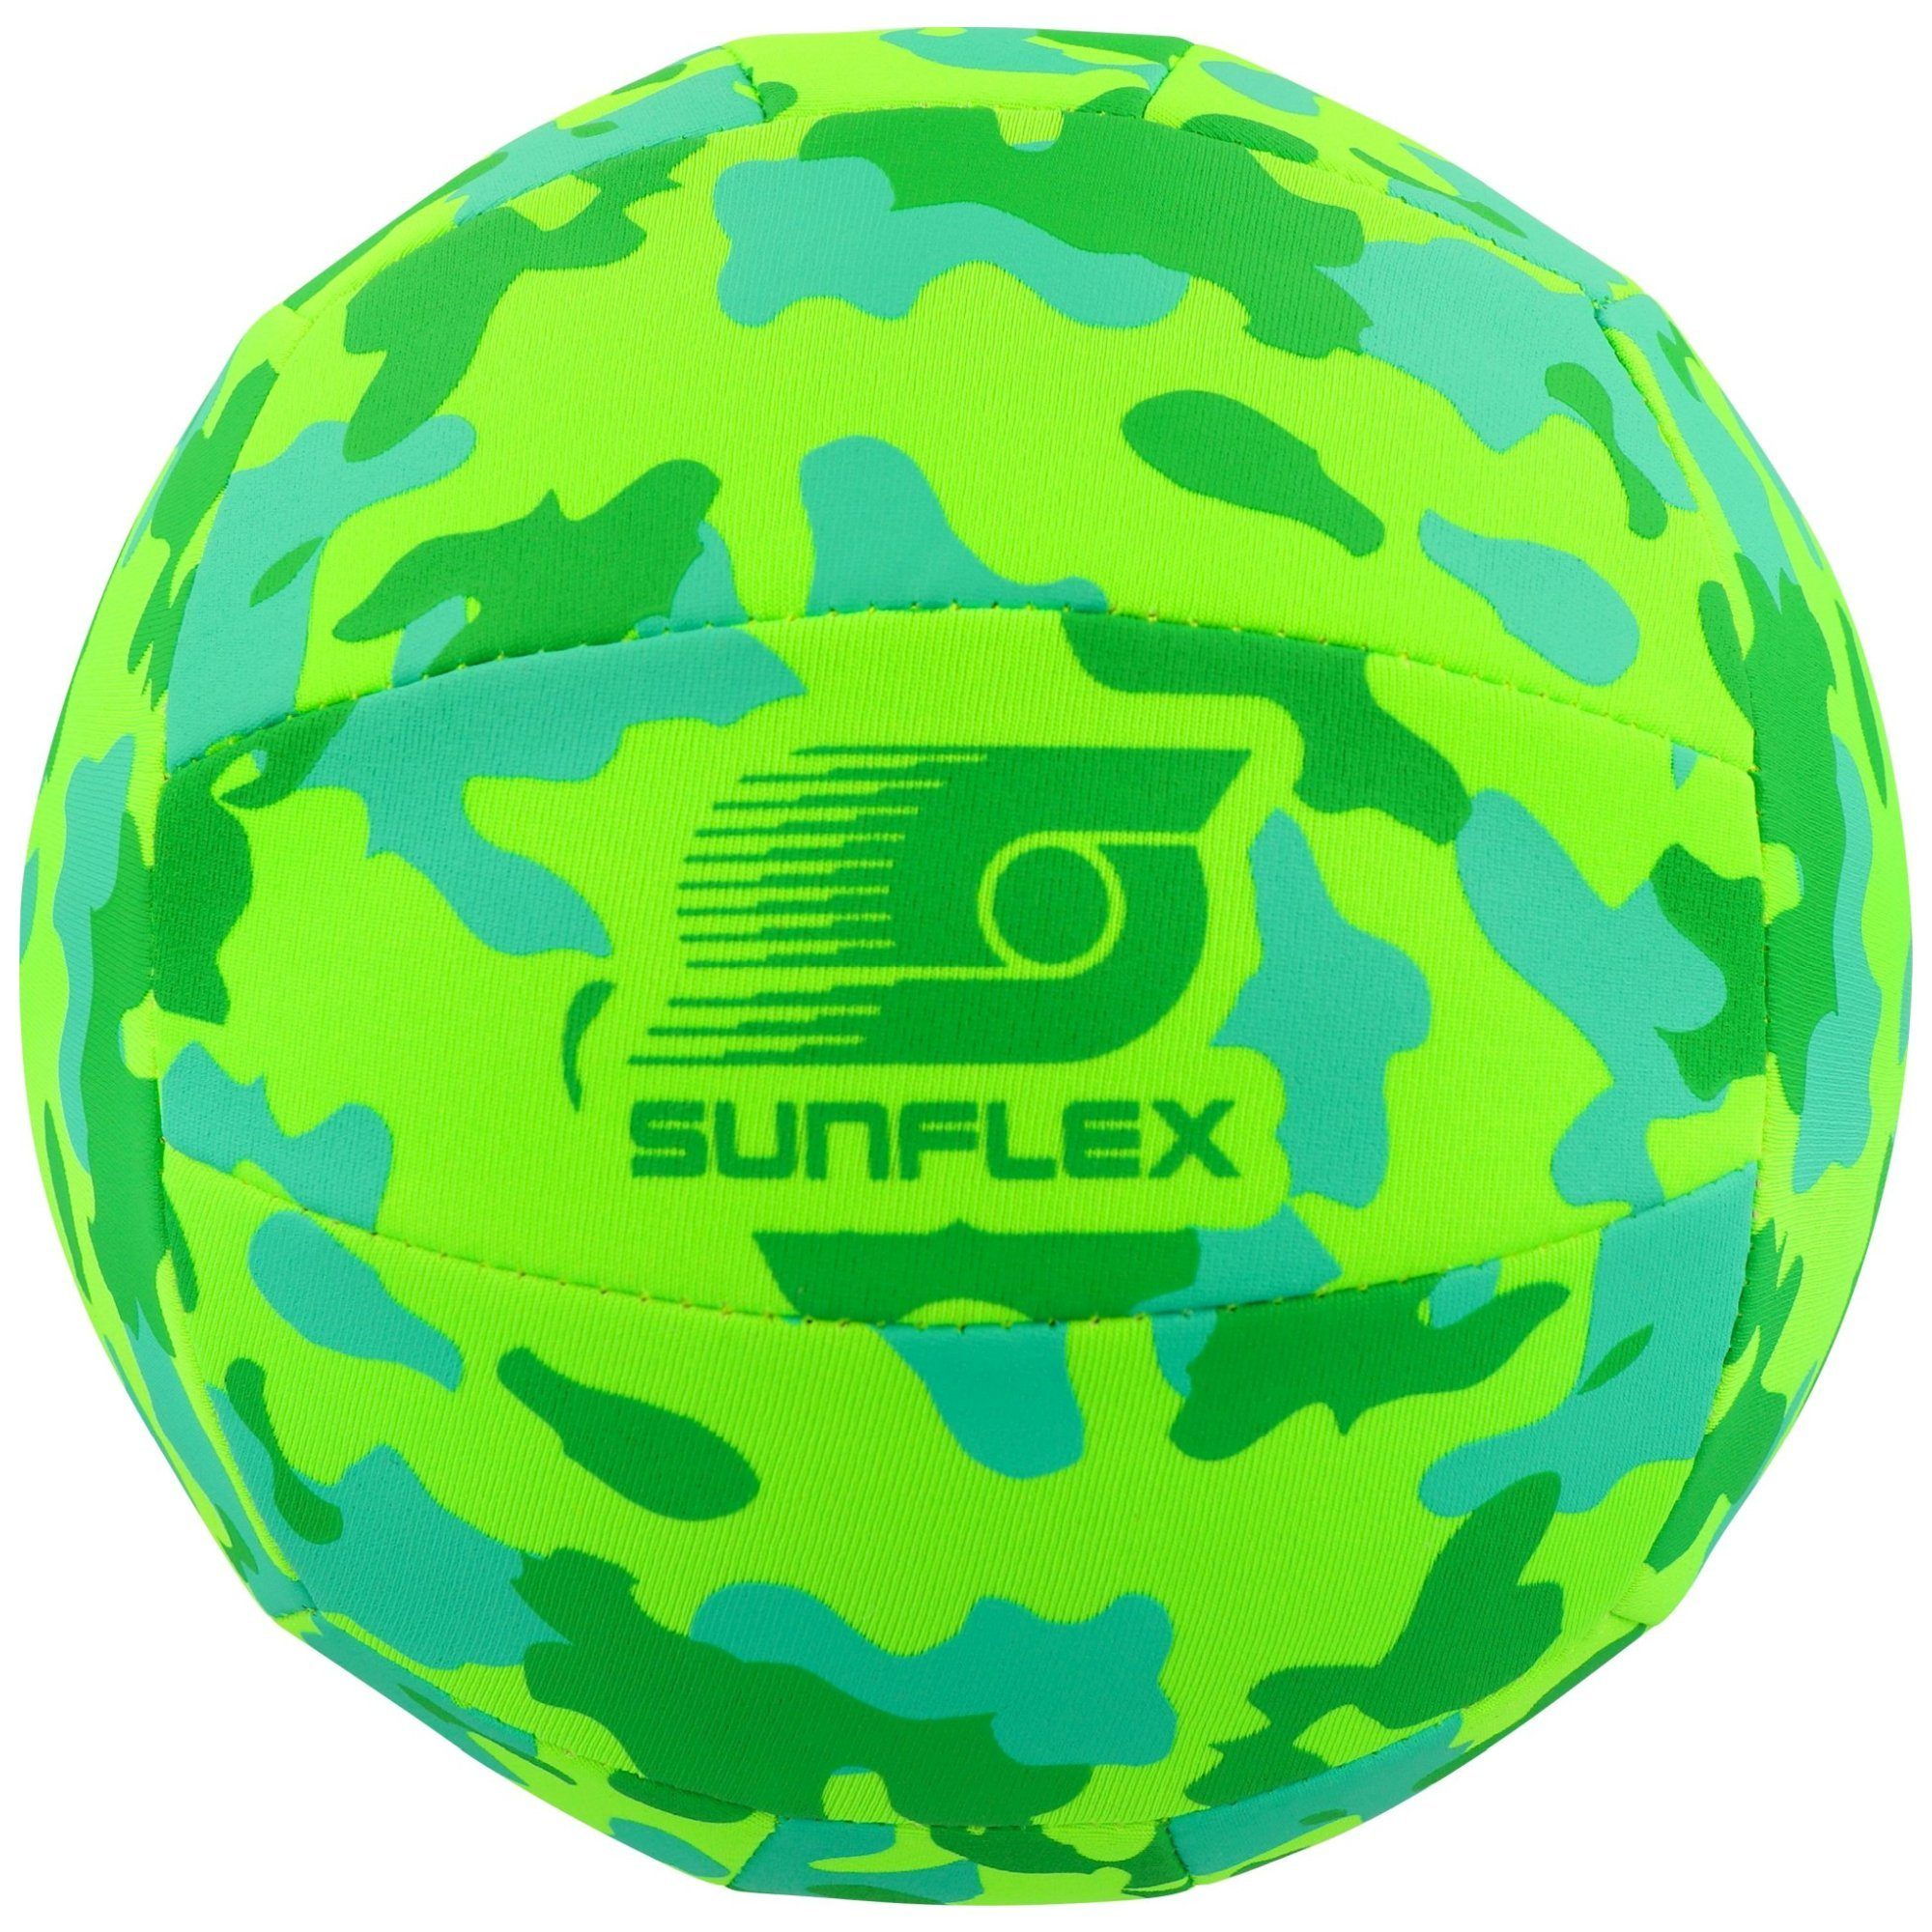 Sunflex Beachsoccerball sunflex Beach- und Size grün Camo 5 Funball